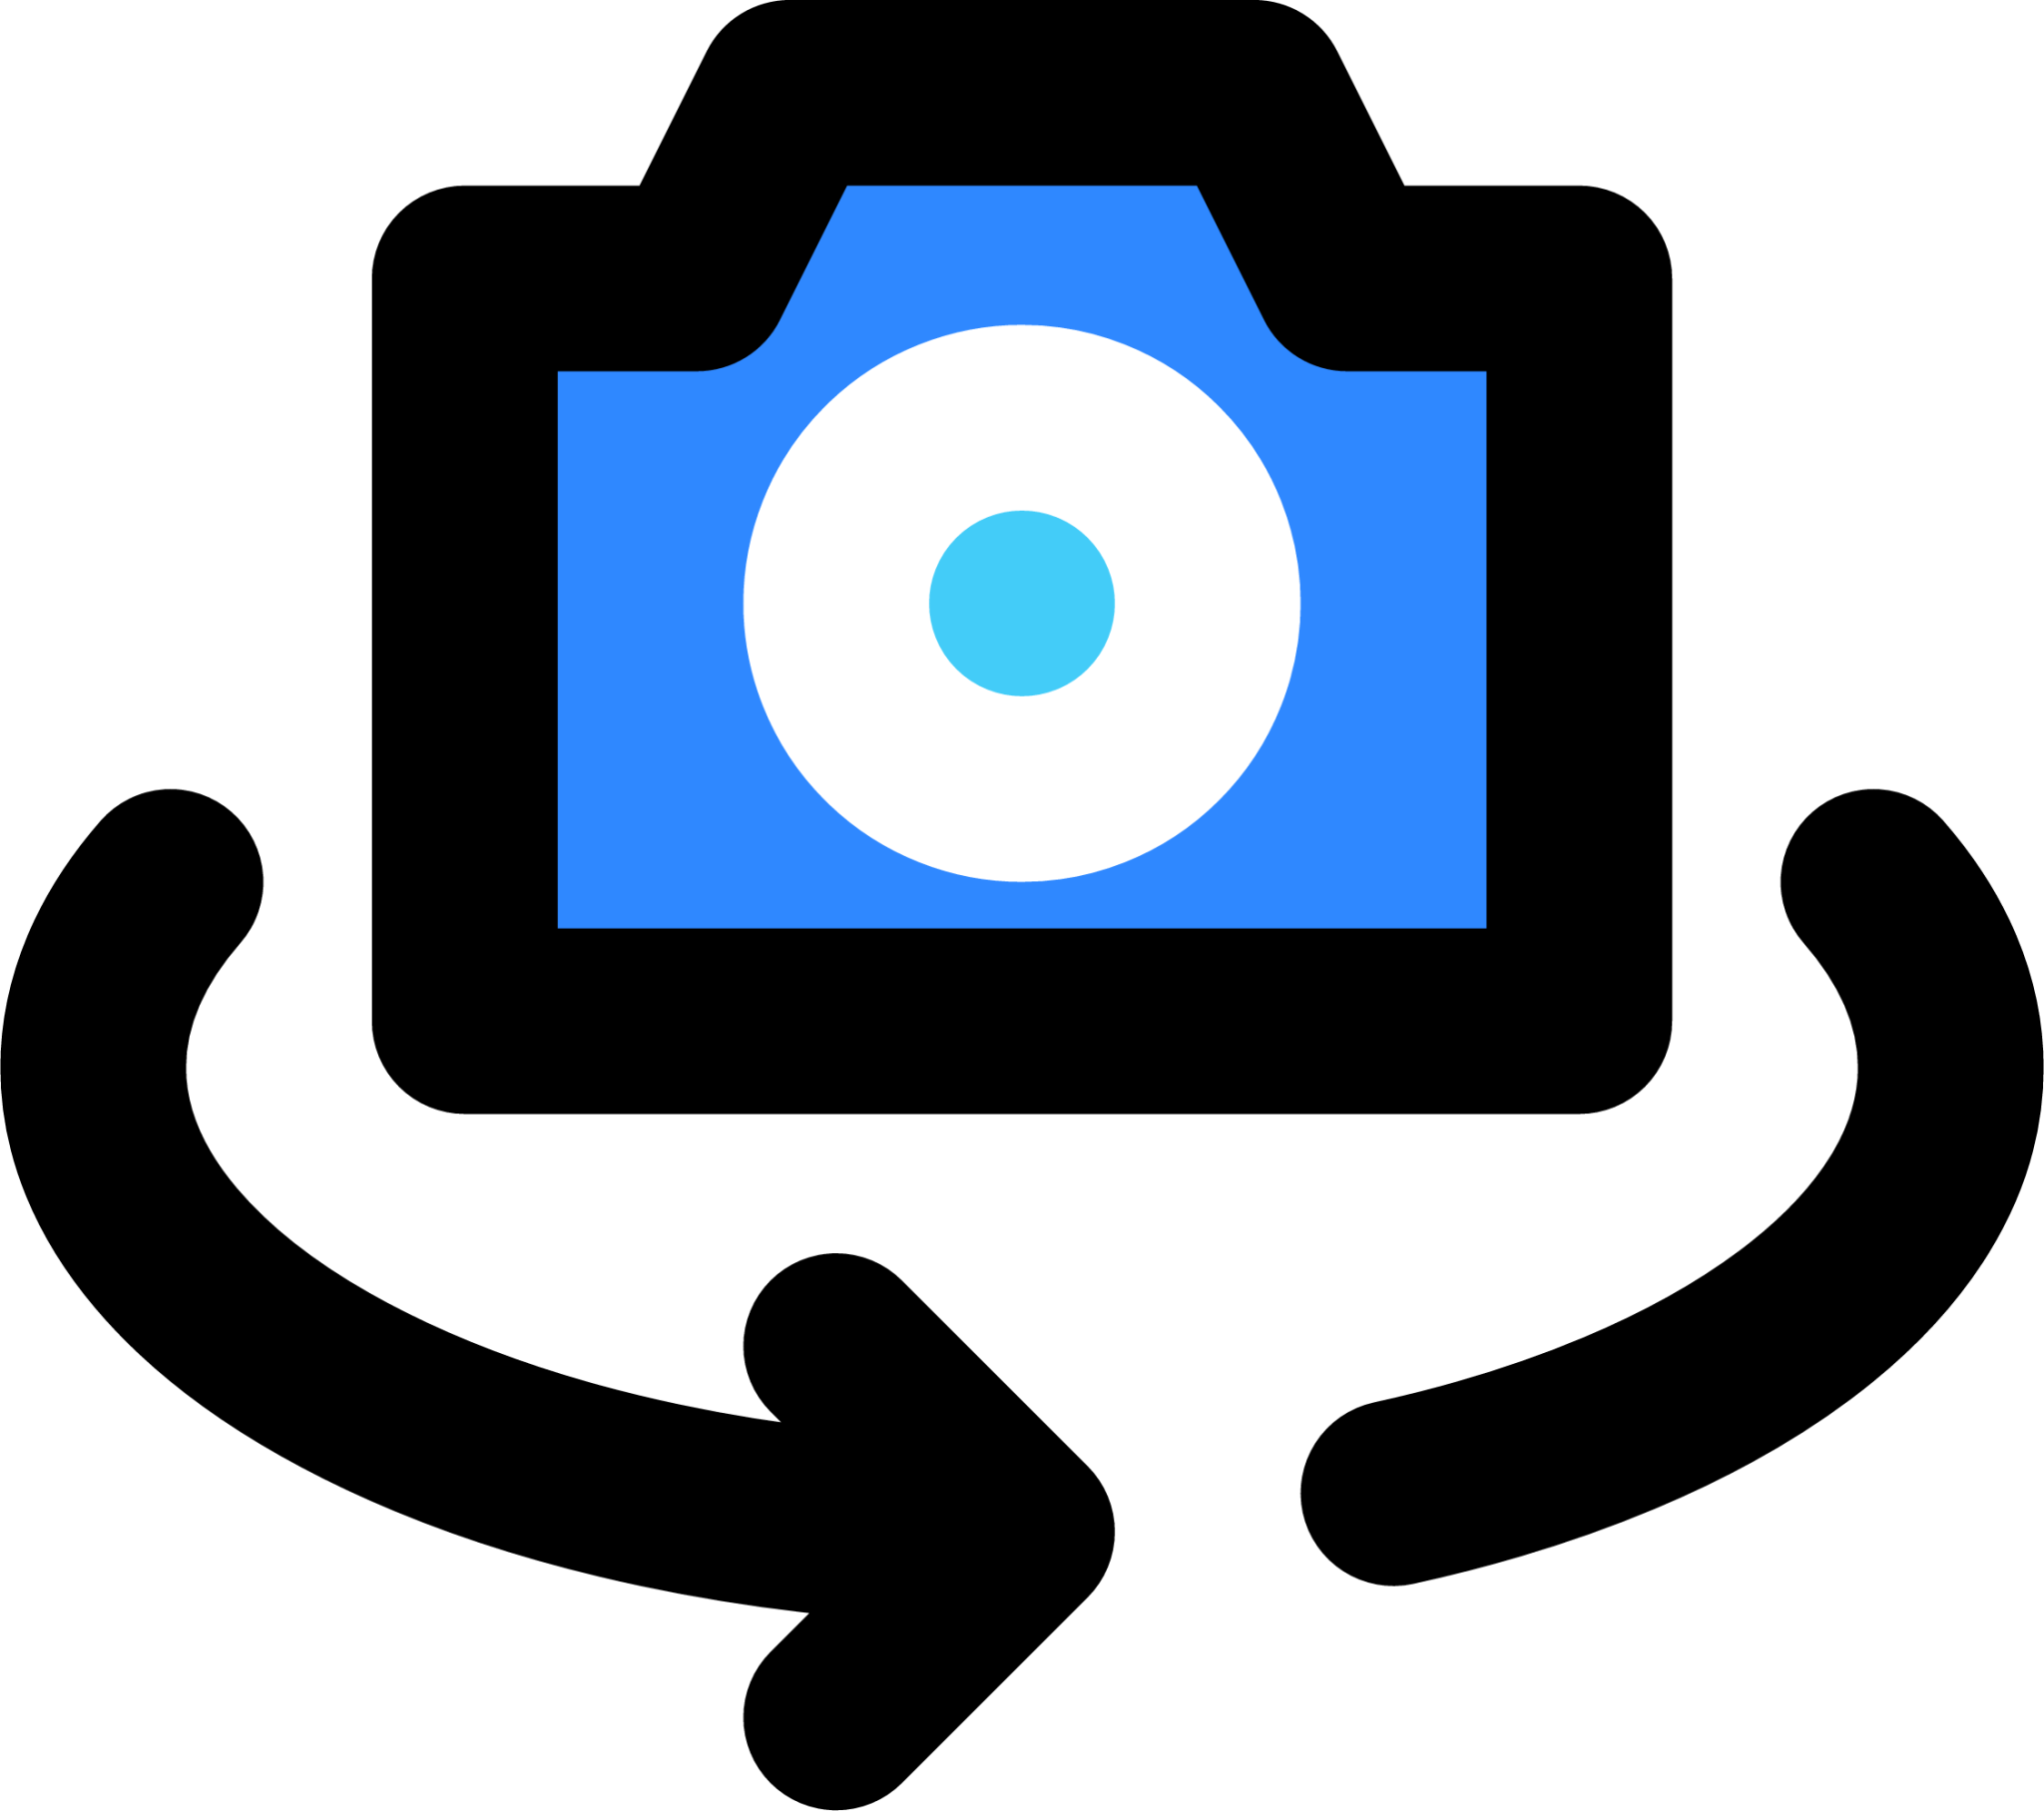 flip camera icon